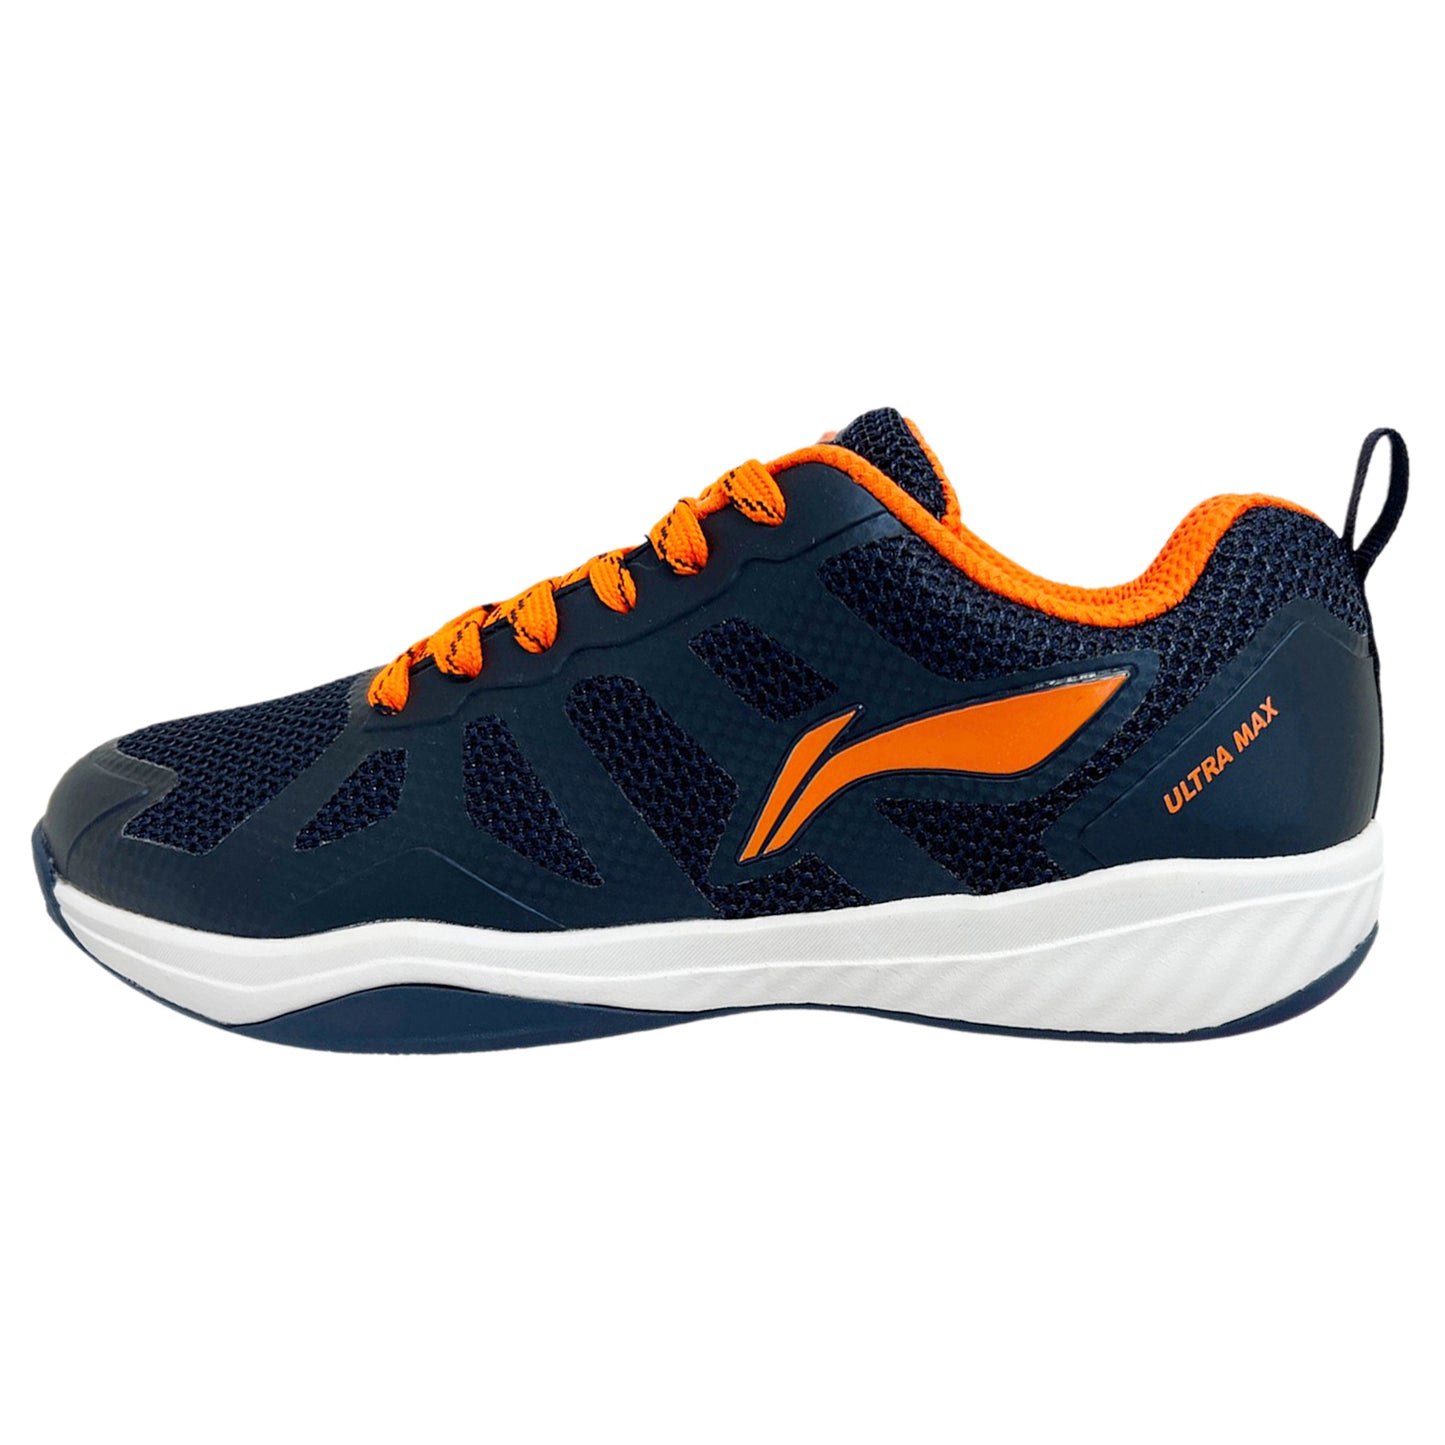 Li-Ning Ultra Max Badminton Shoes - Best Price online Prokicksports.com